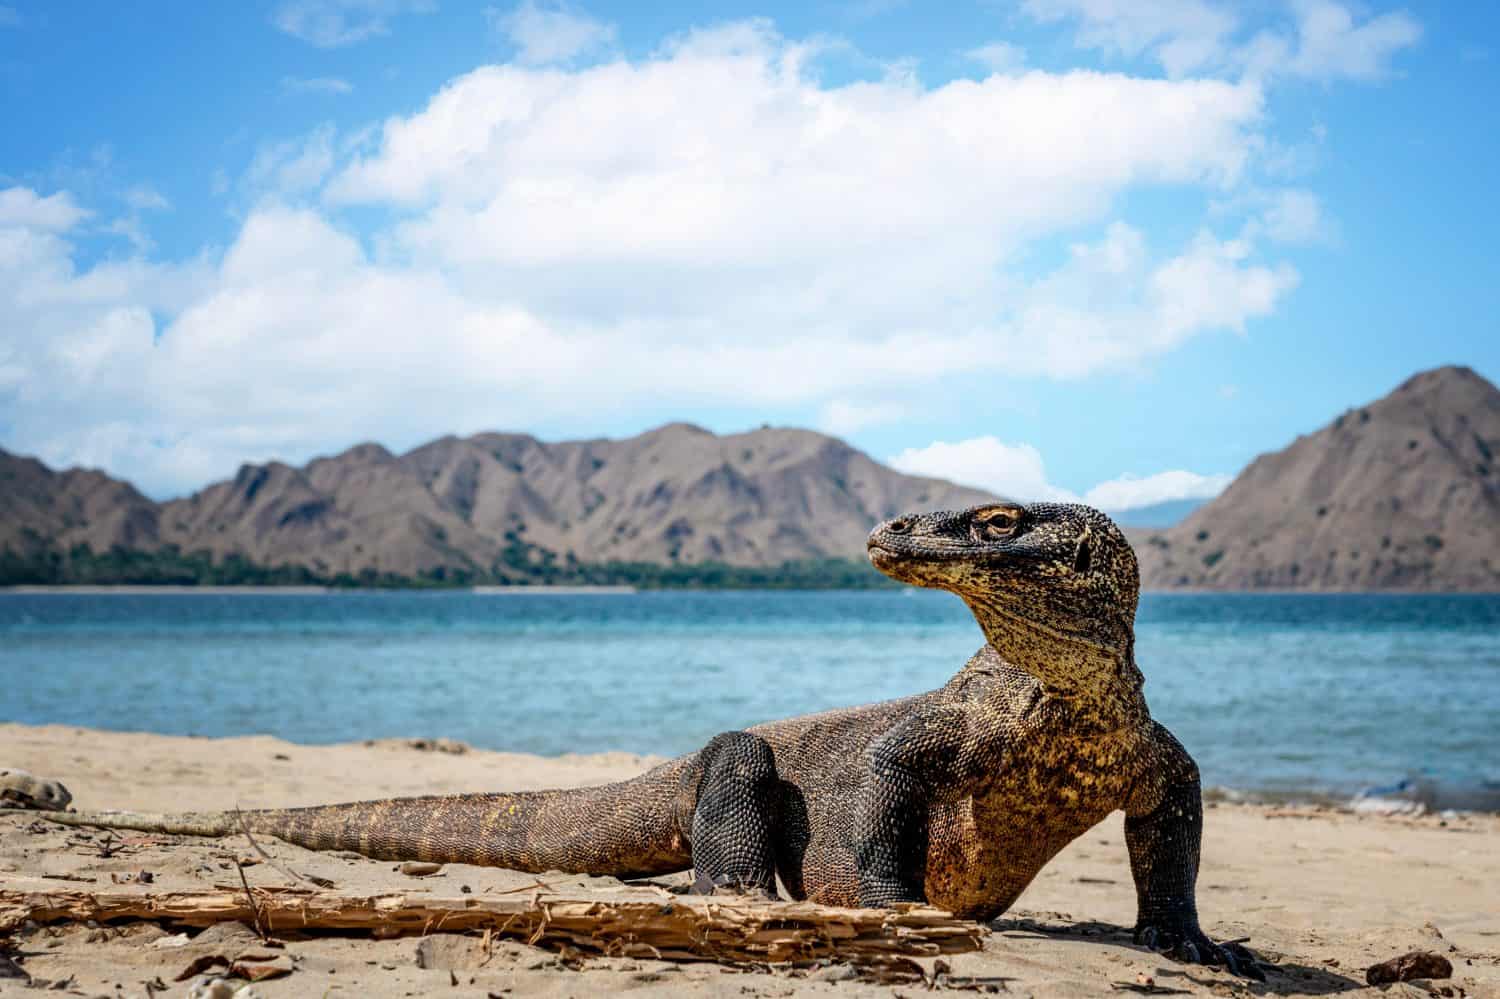 Komodo dragon on Komodo island. His life in 2023 is in danger